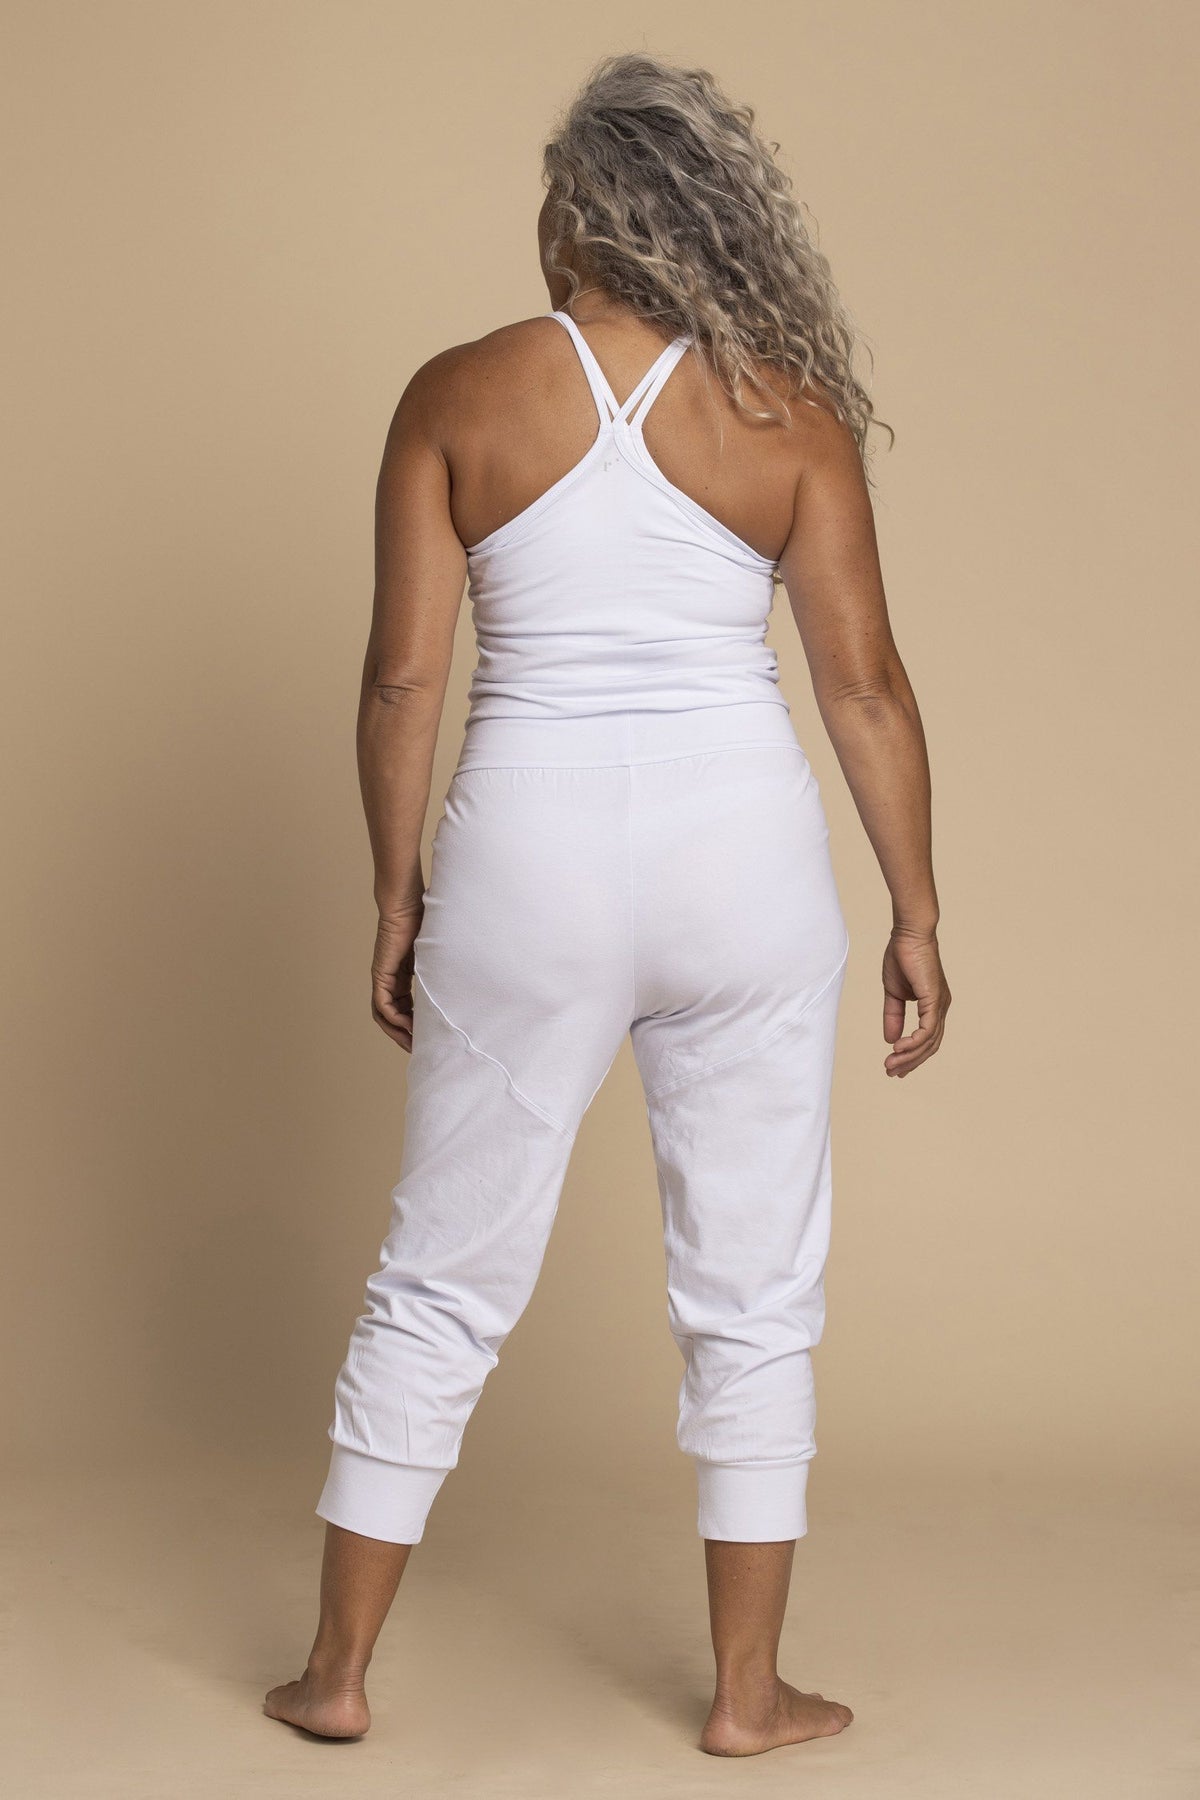 Pure White Yoga Jumpsuit womens clothing Ripple Yoga Wear 